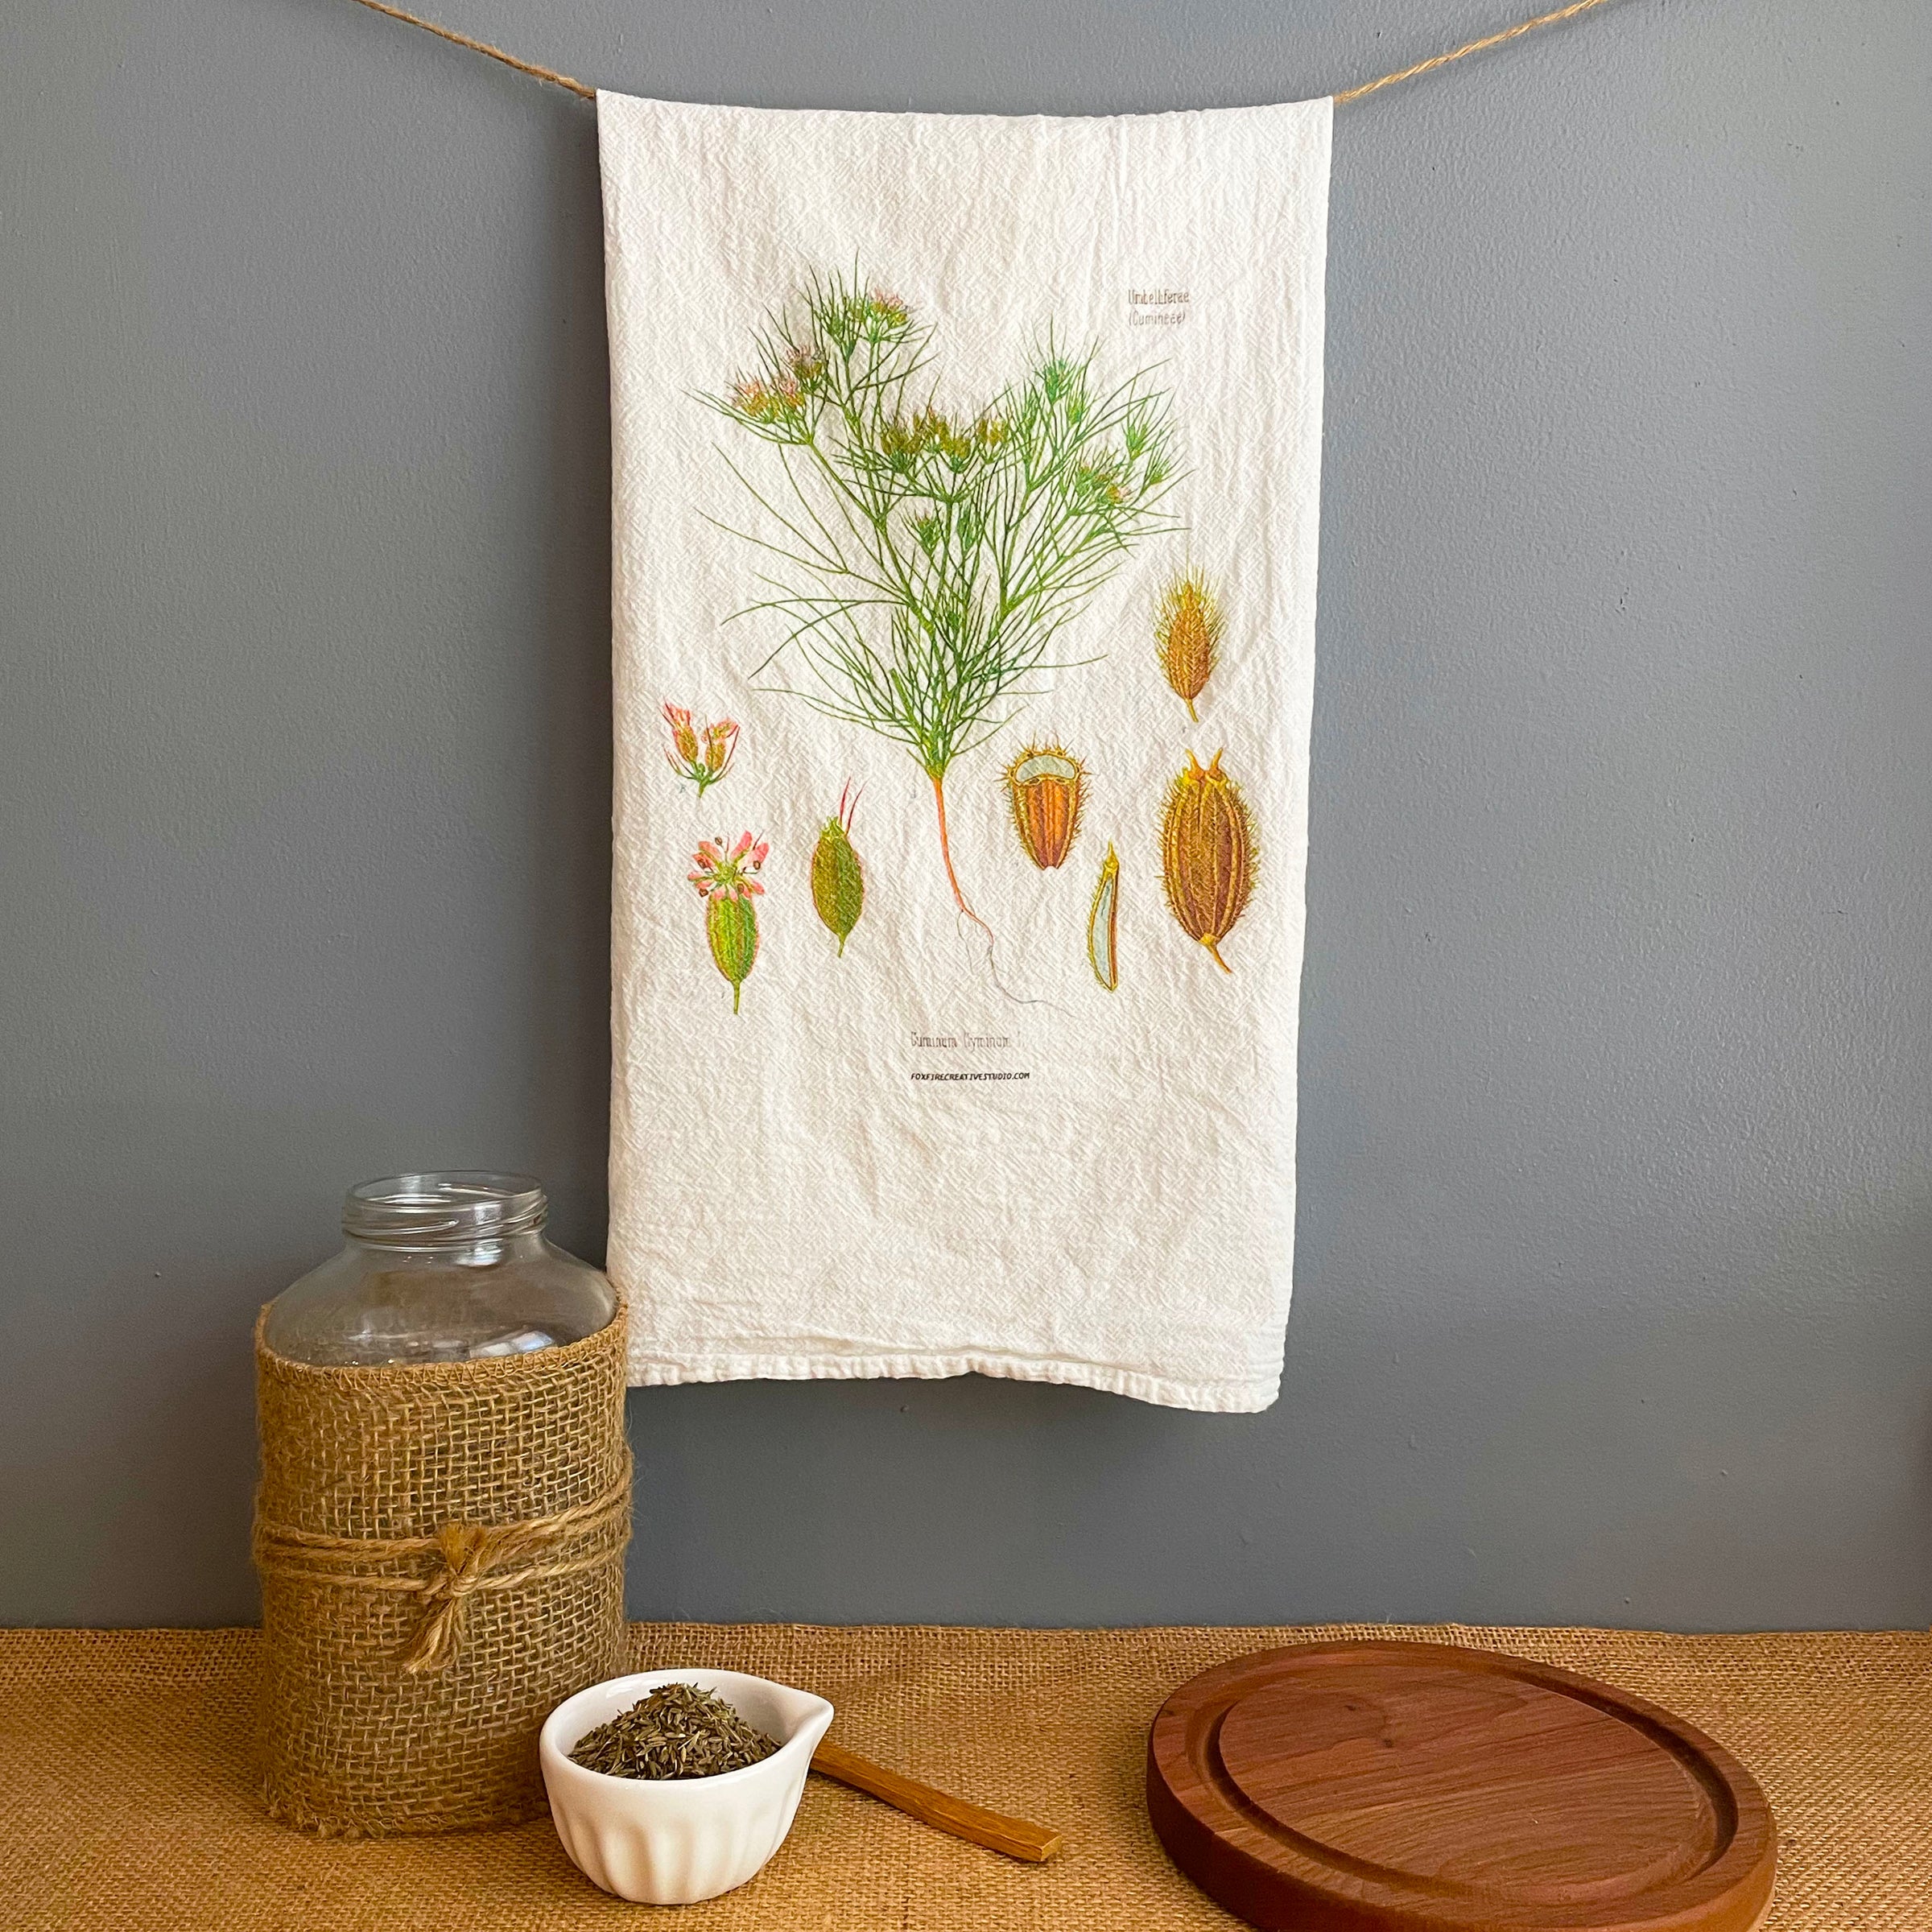 Embroidered kitchen towels - Flour sack towels - Tea Towel